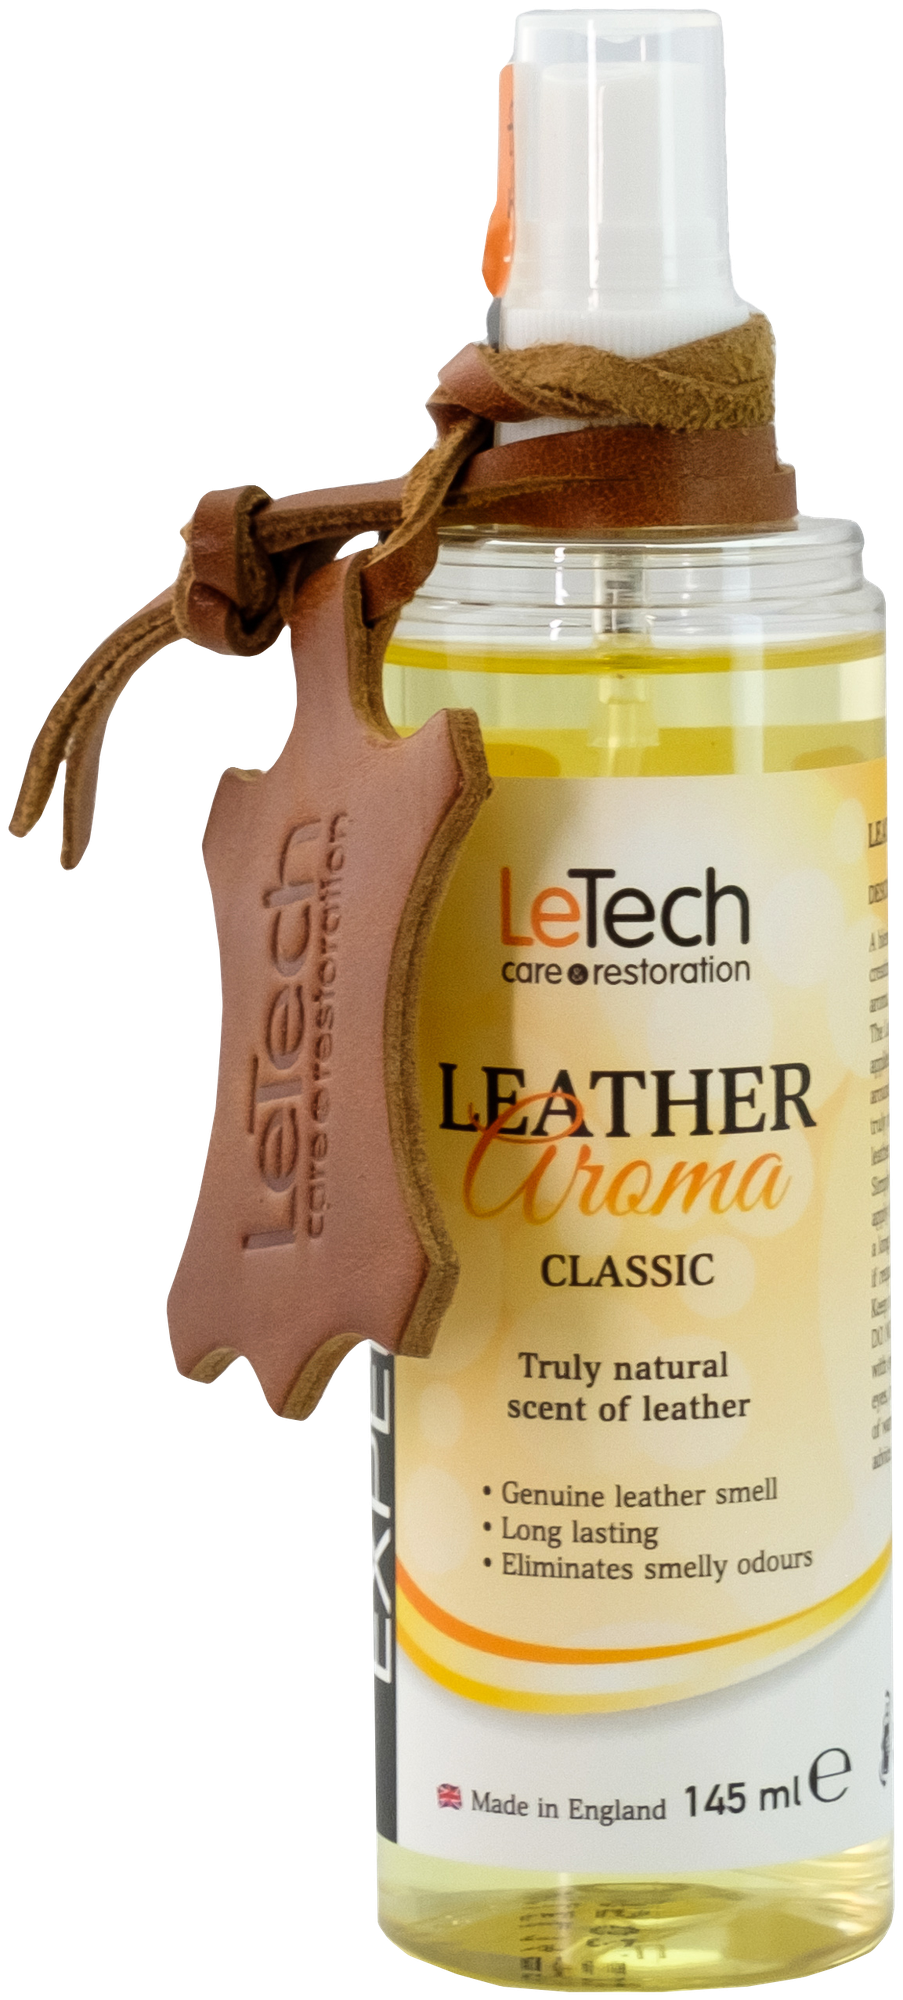 Leather Aroma